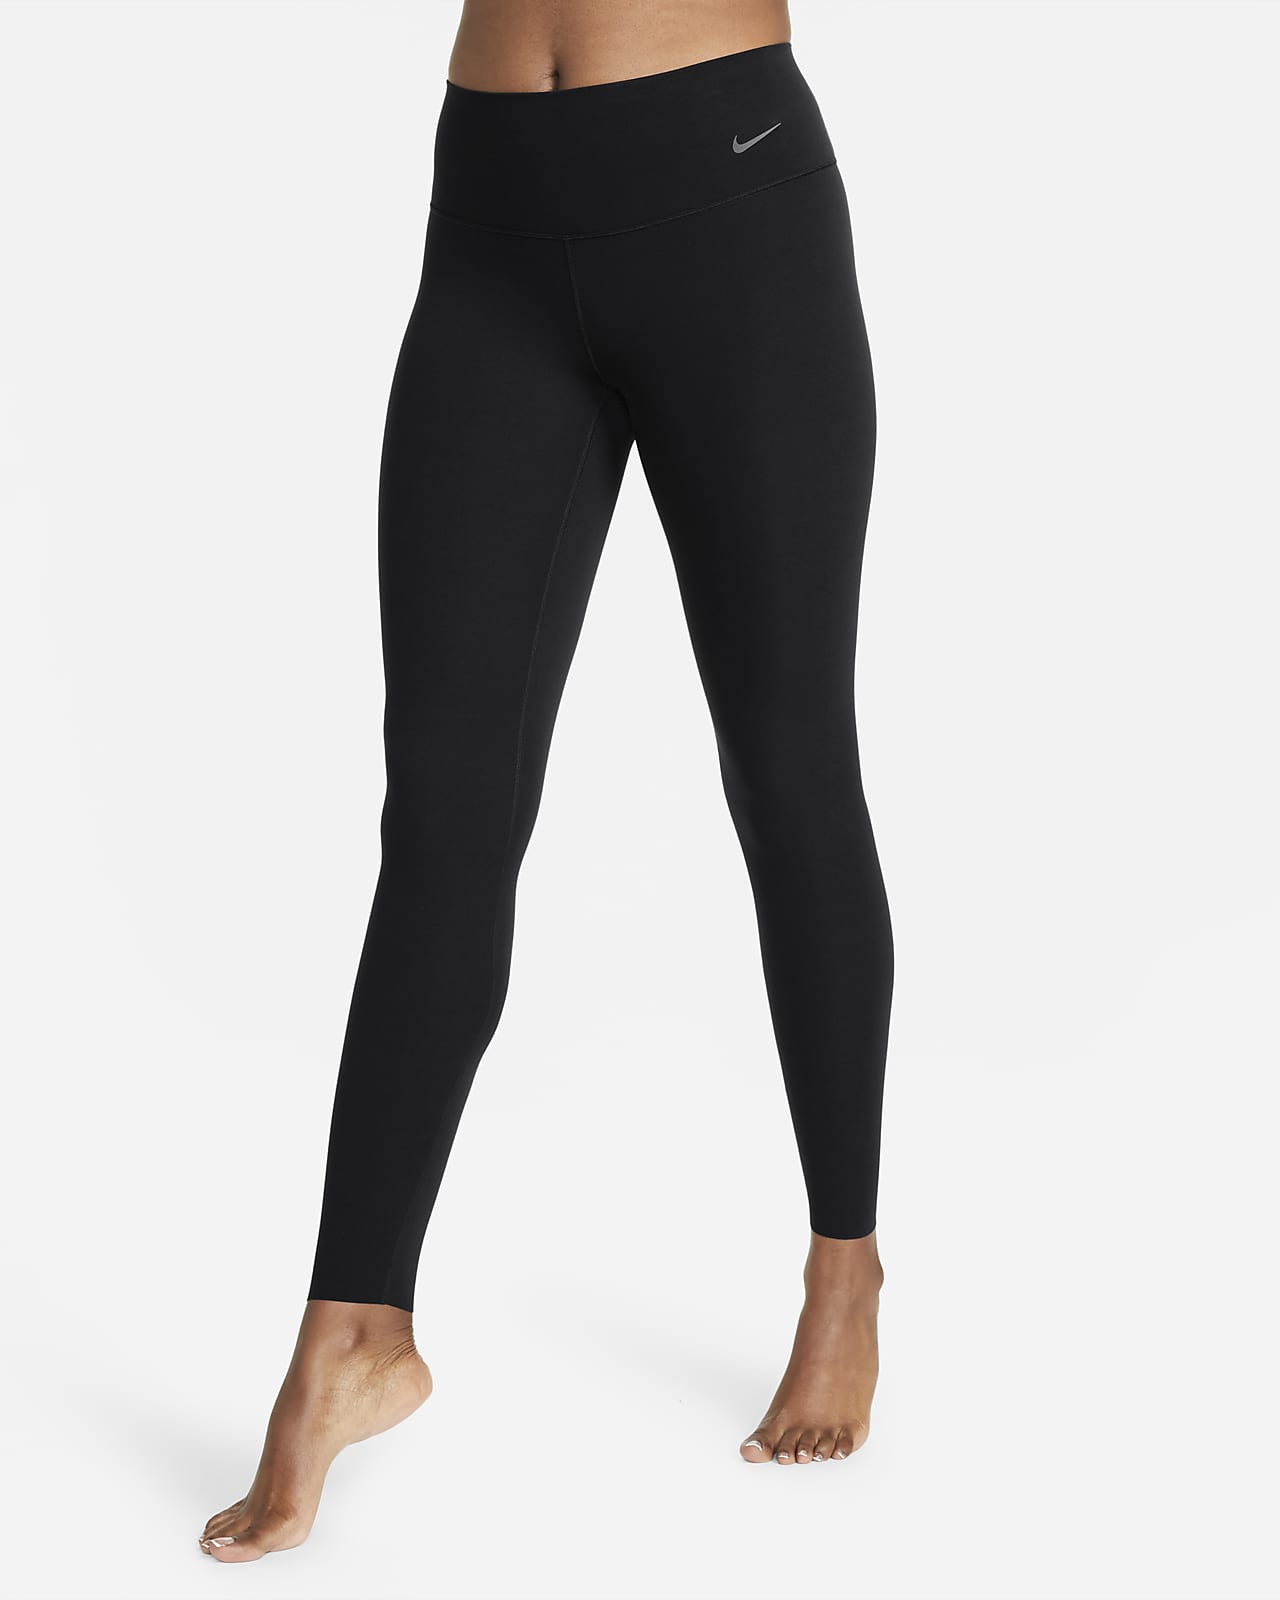 Nike Pro InterTwist Leggings Black - $30 (60% Off Retail) - From Abby